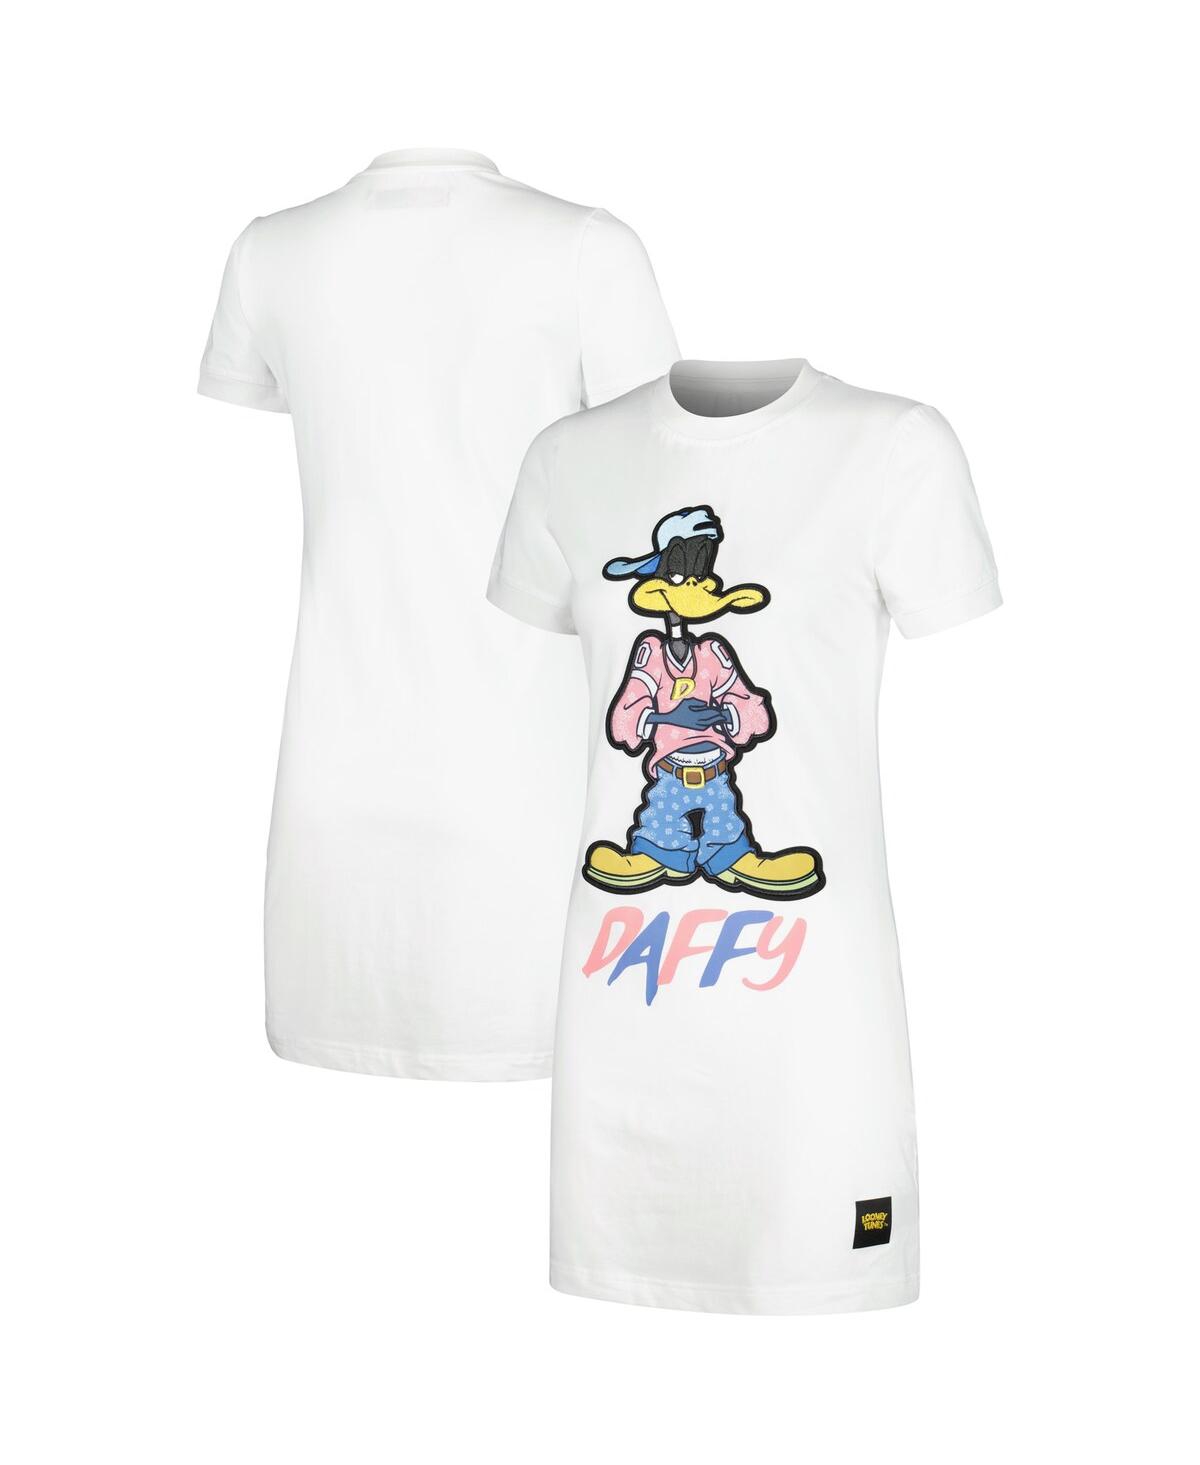 Women's Freeze Max Daffy Duck White Looney Tunes Jersey T-shirt Dress - White